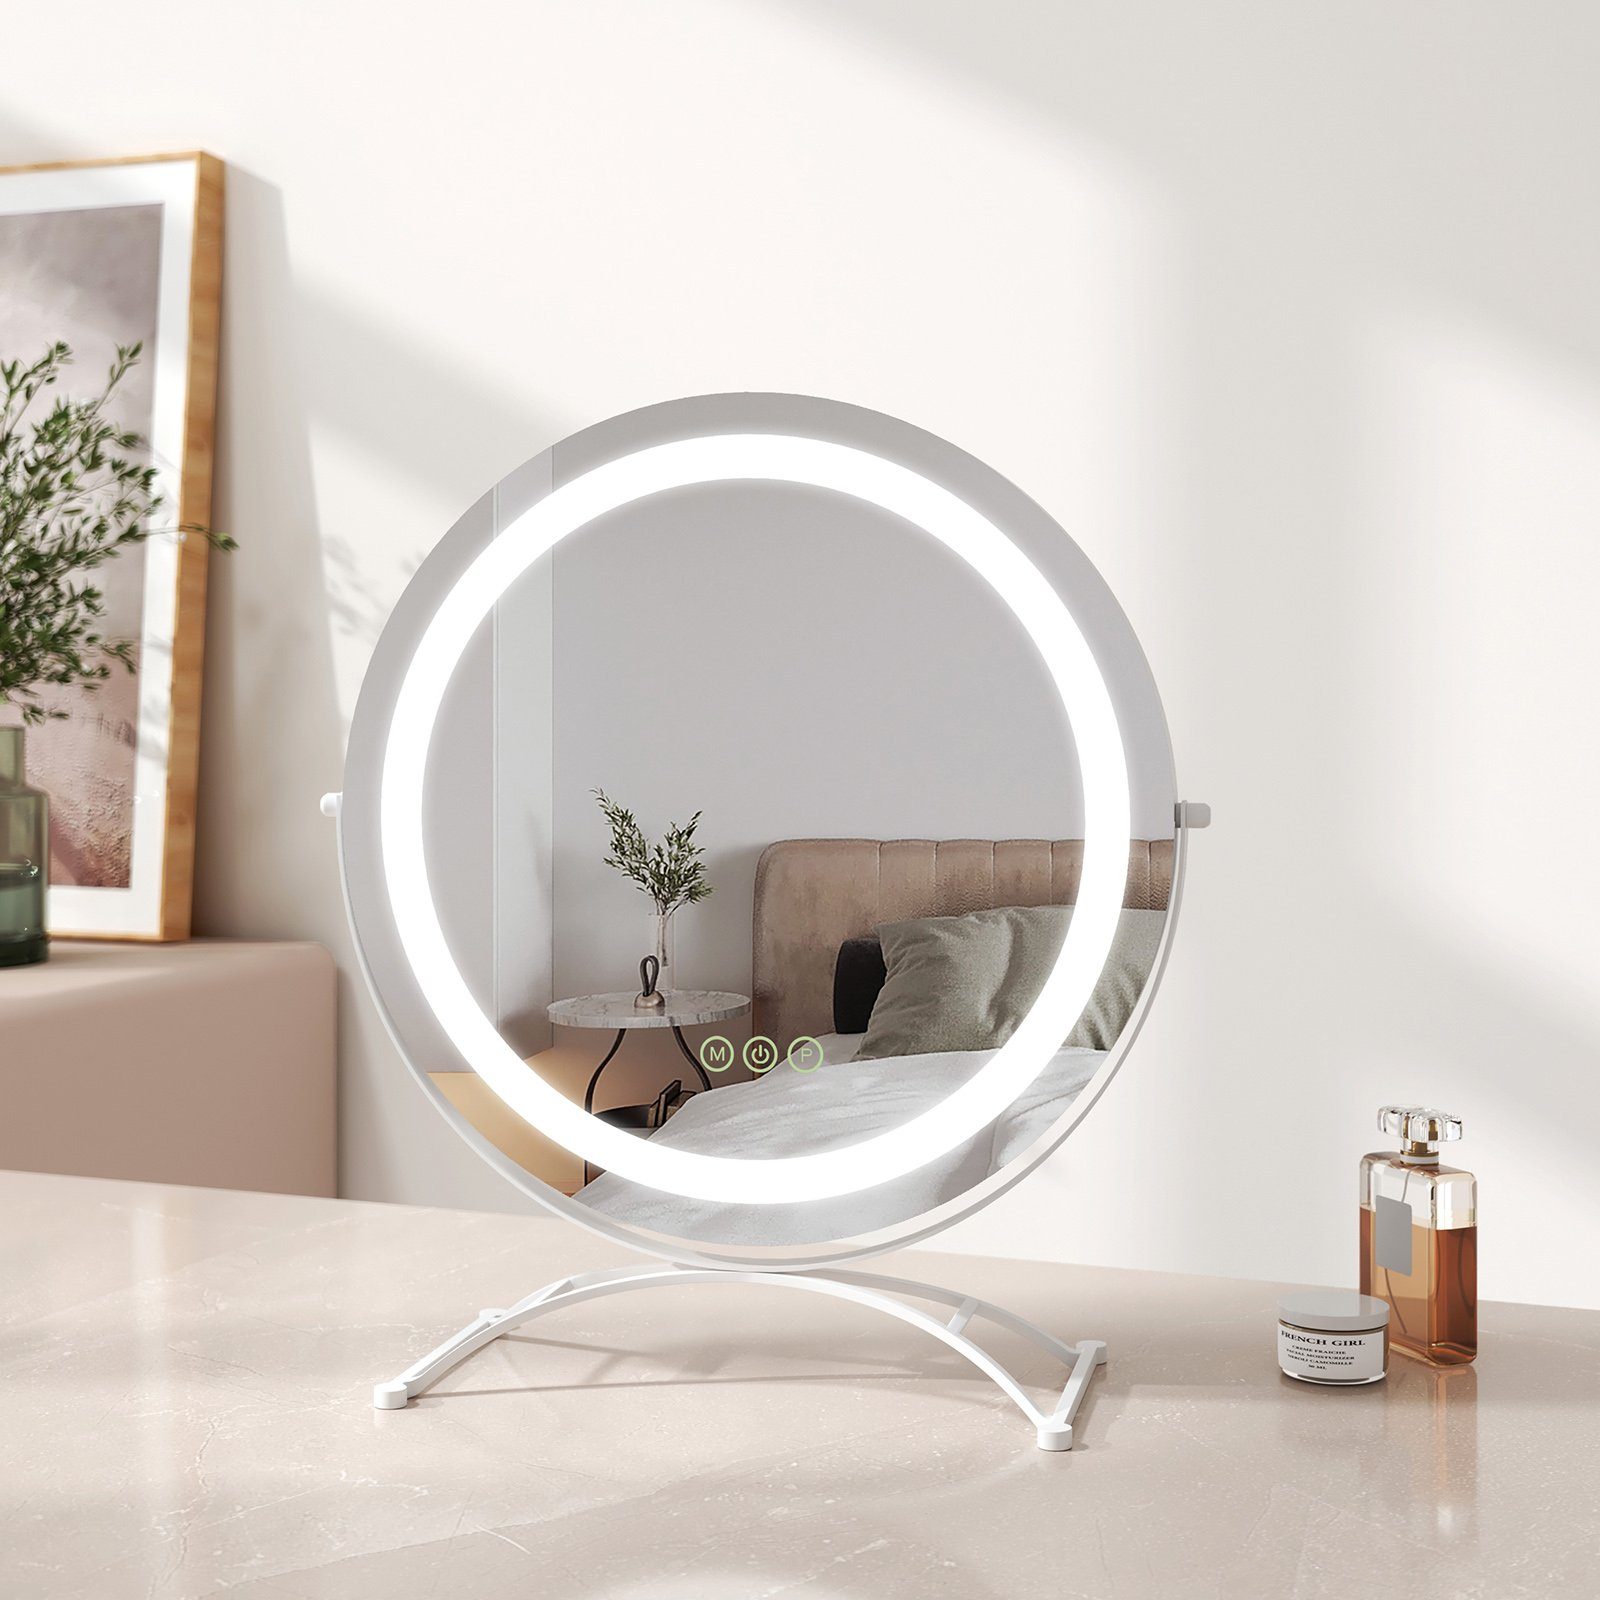 EMKE Kosmetikspiegel Schminkspiegel Runder Kosmetikspiegel mit Beleuchtung  LED Tischspiegel, mit Touch, 3 Lichtfarben Dimmbar, Memory-Funktion, 360°  Drehbar